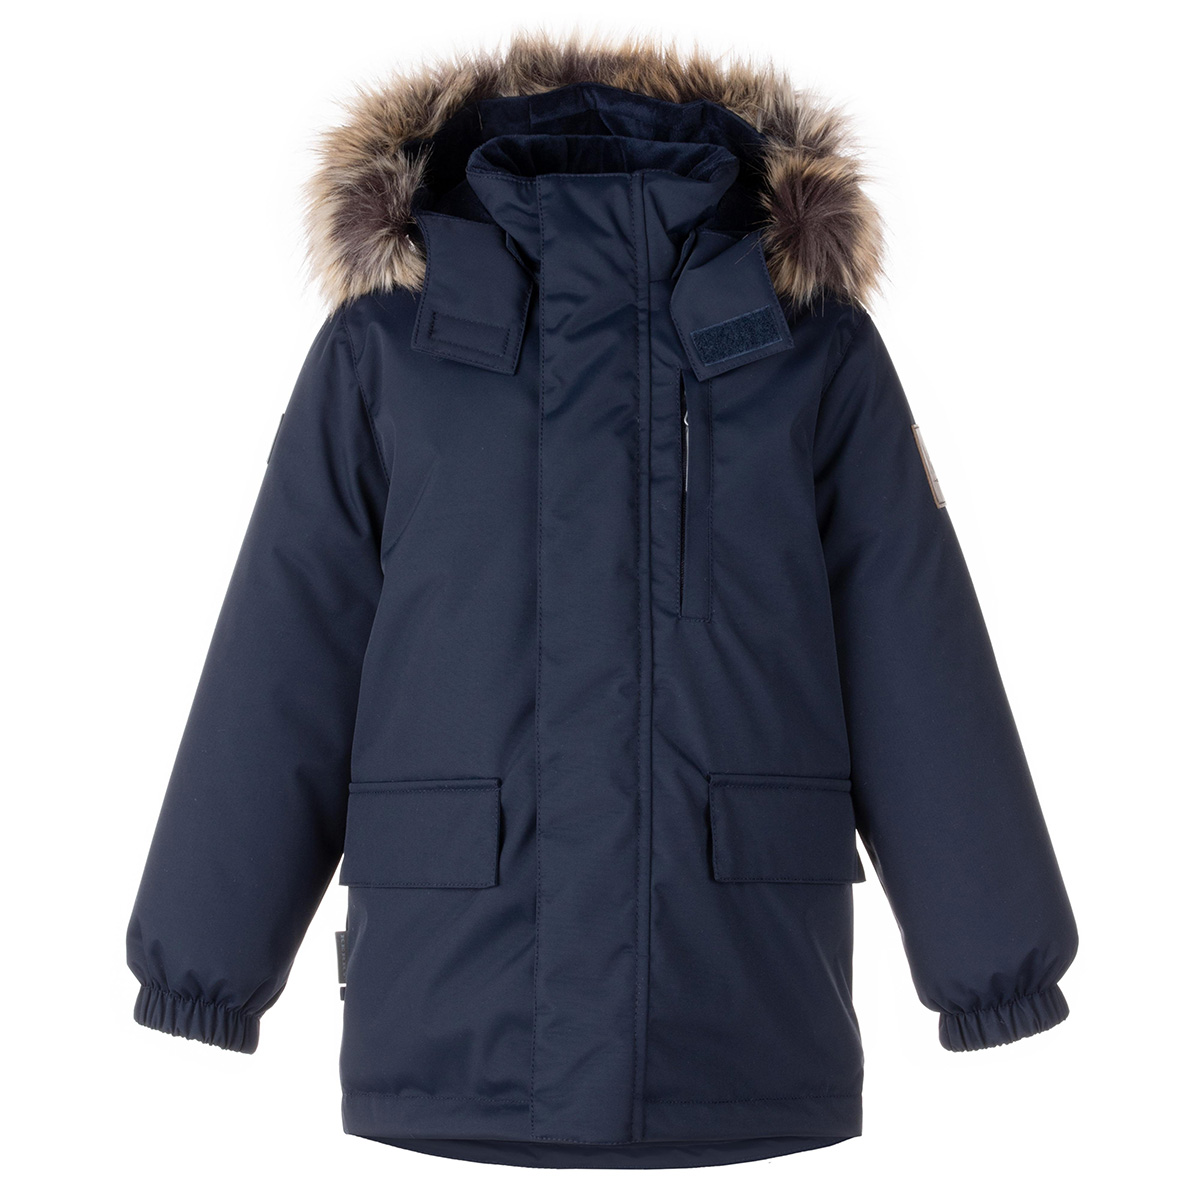 Парка детская KERRY Snow K23441, темно-синий, 116 куртка quiksilver travis rice snow jacket for boy s insignia blue р 10